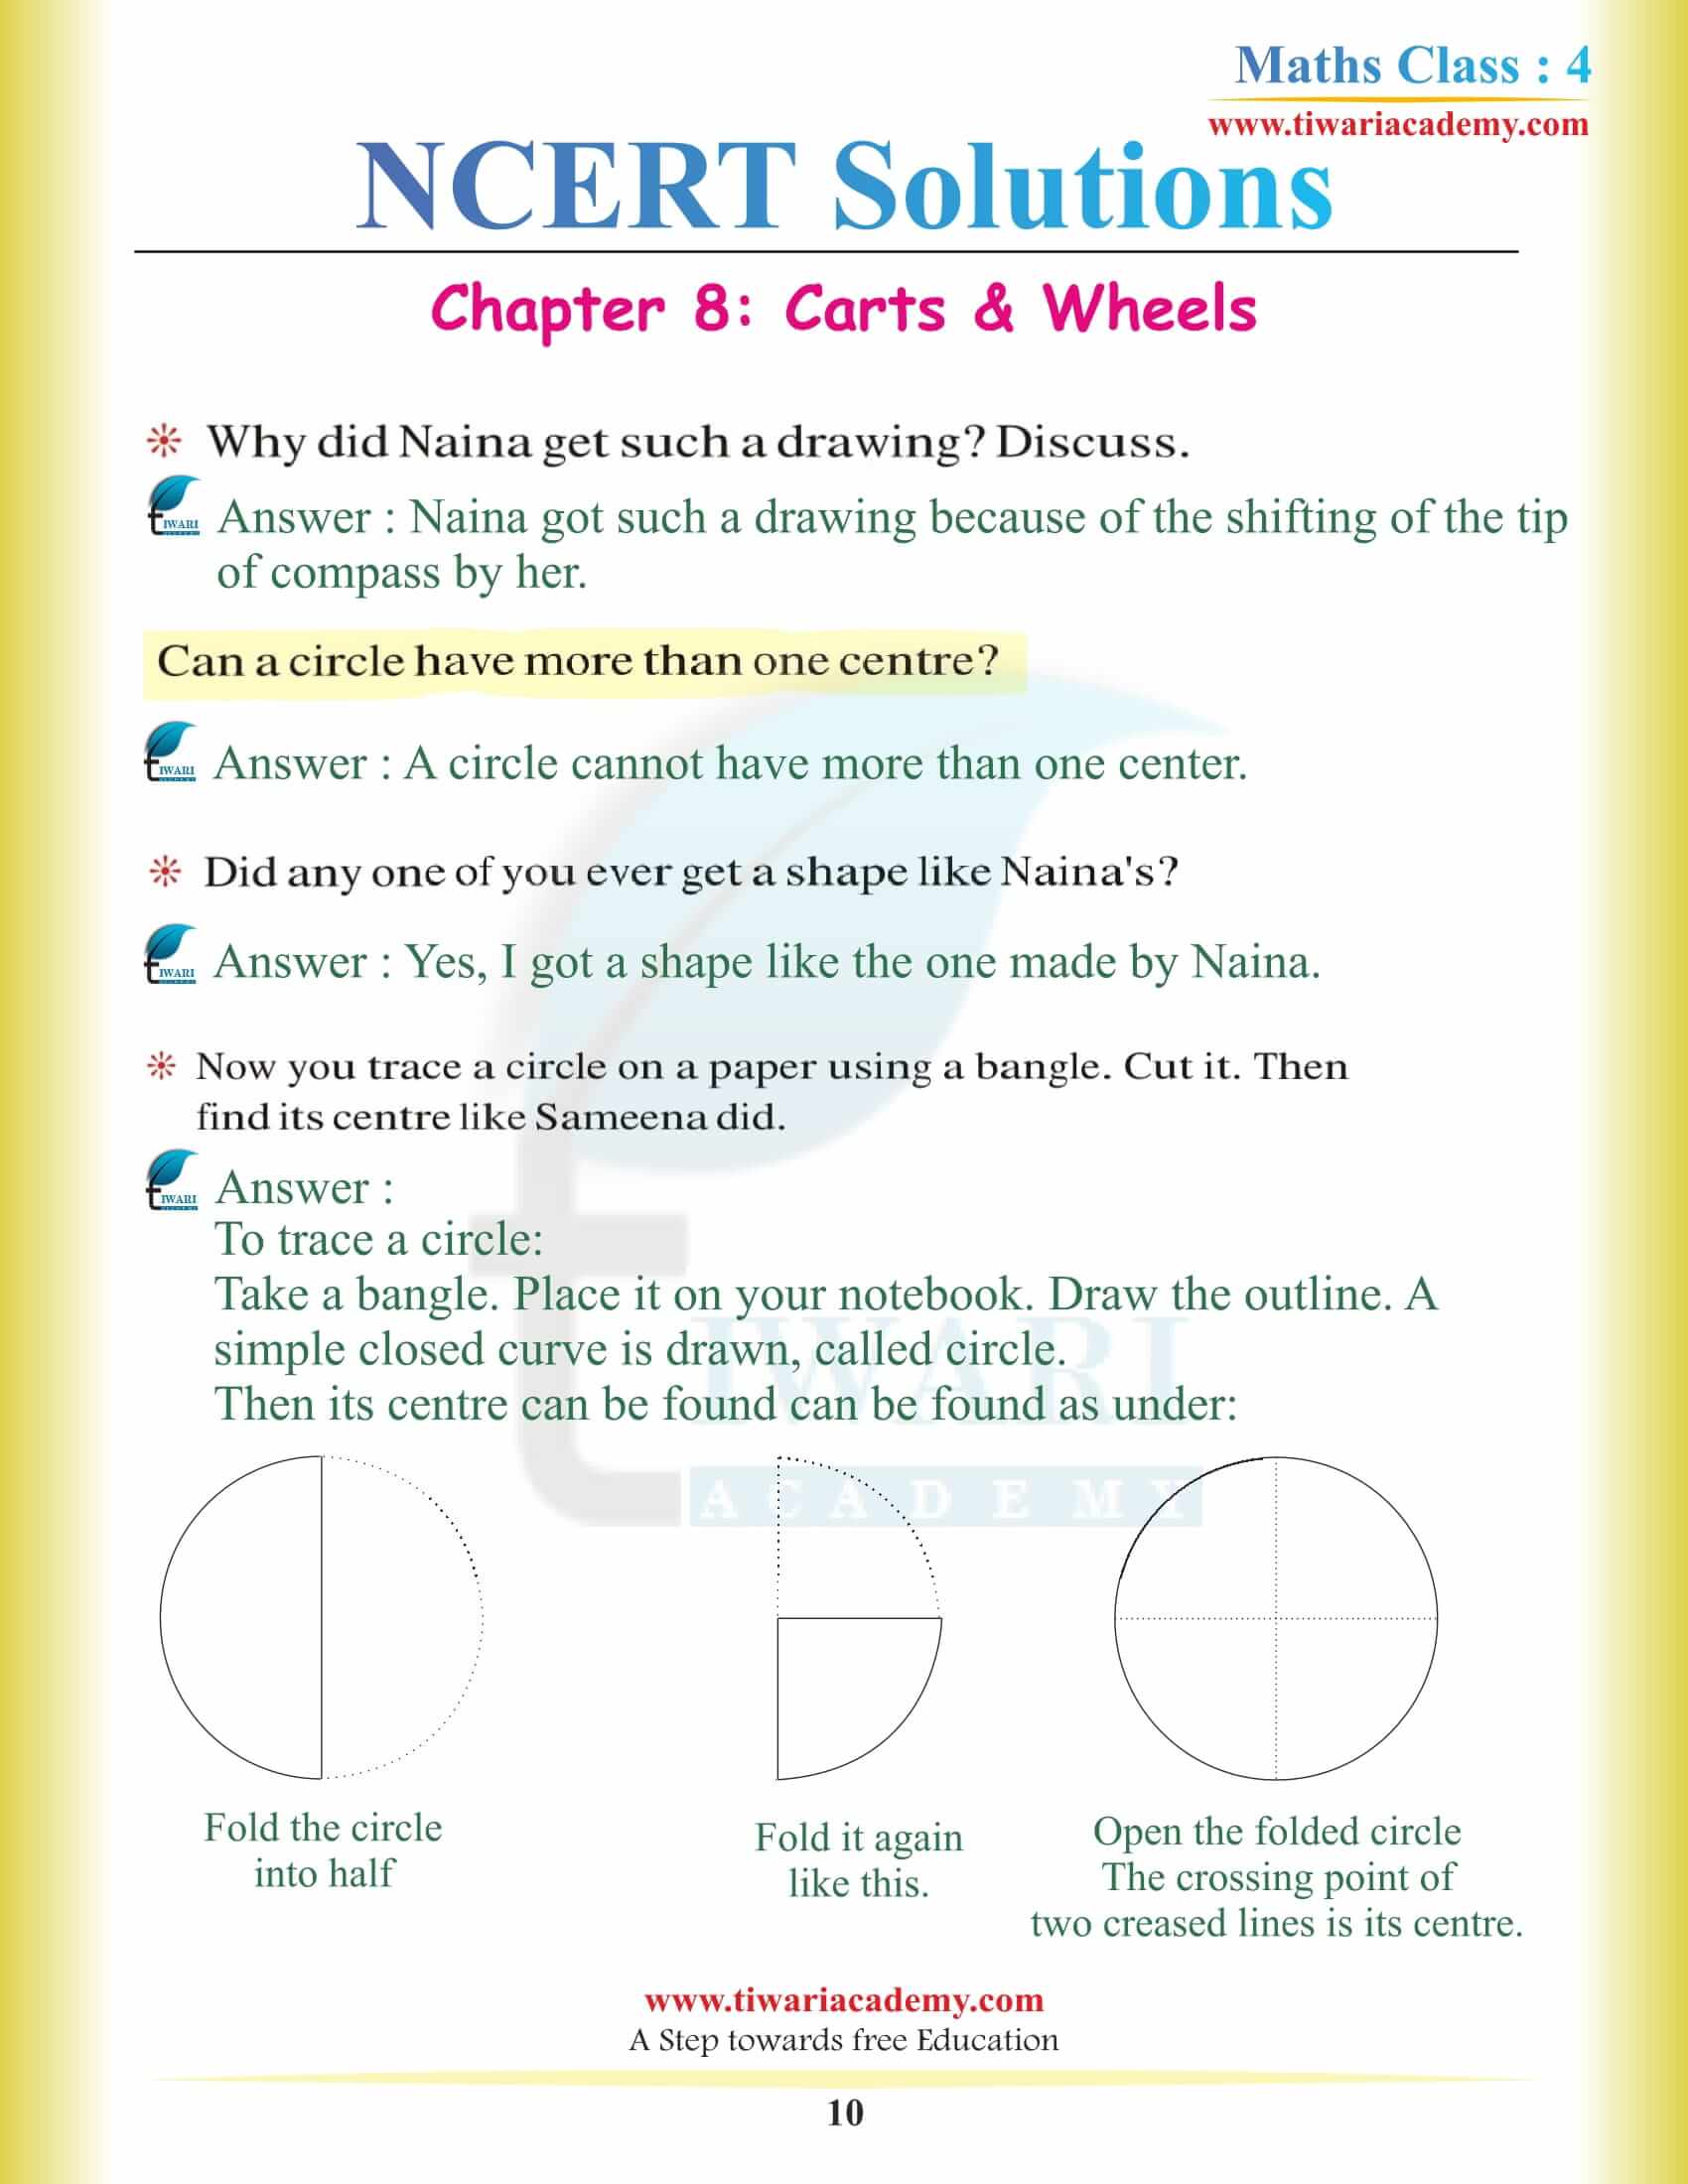 Class 4 Maths NCERT Chapter 8 Solutions in English medium